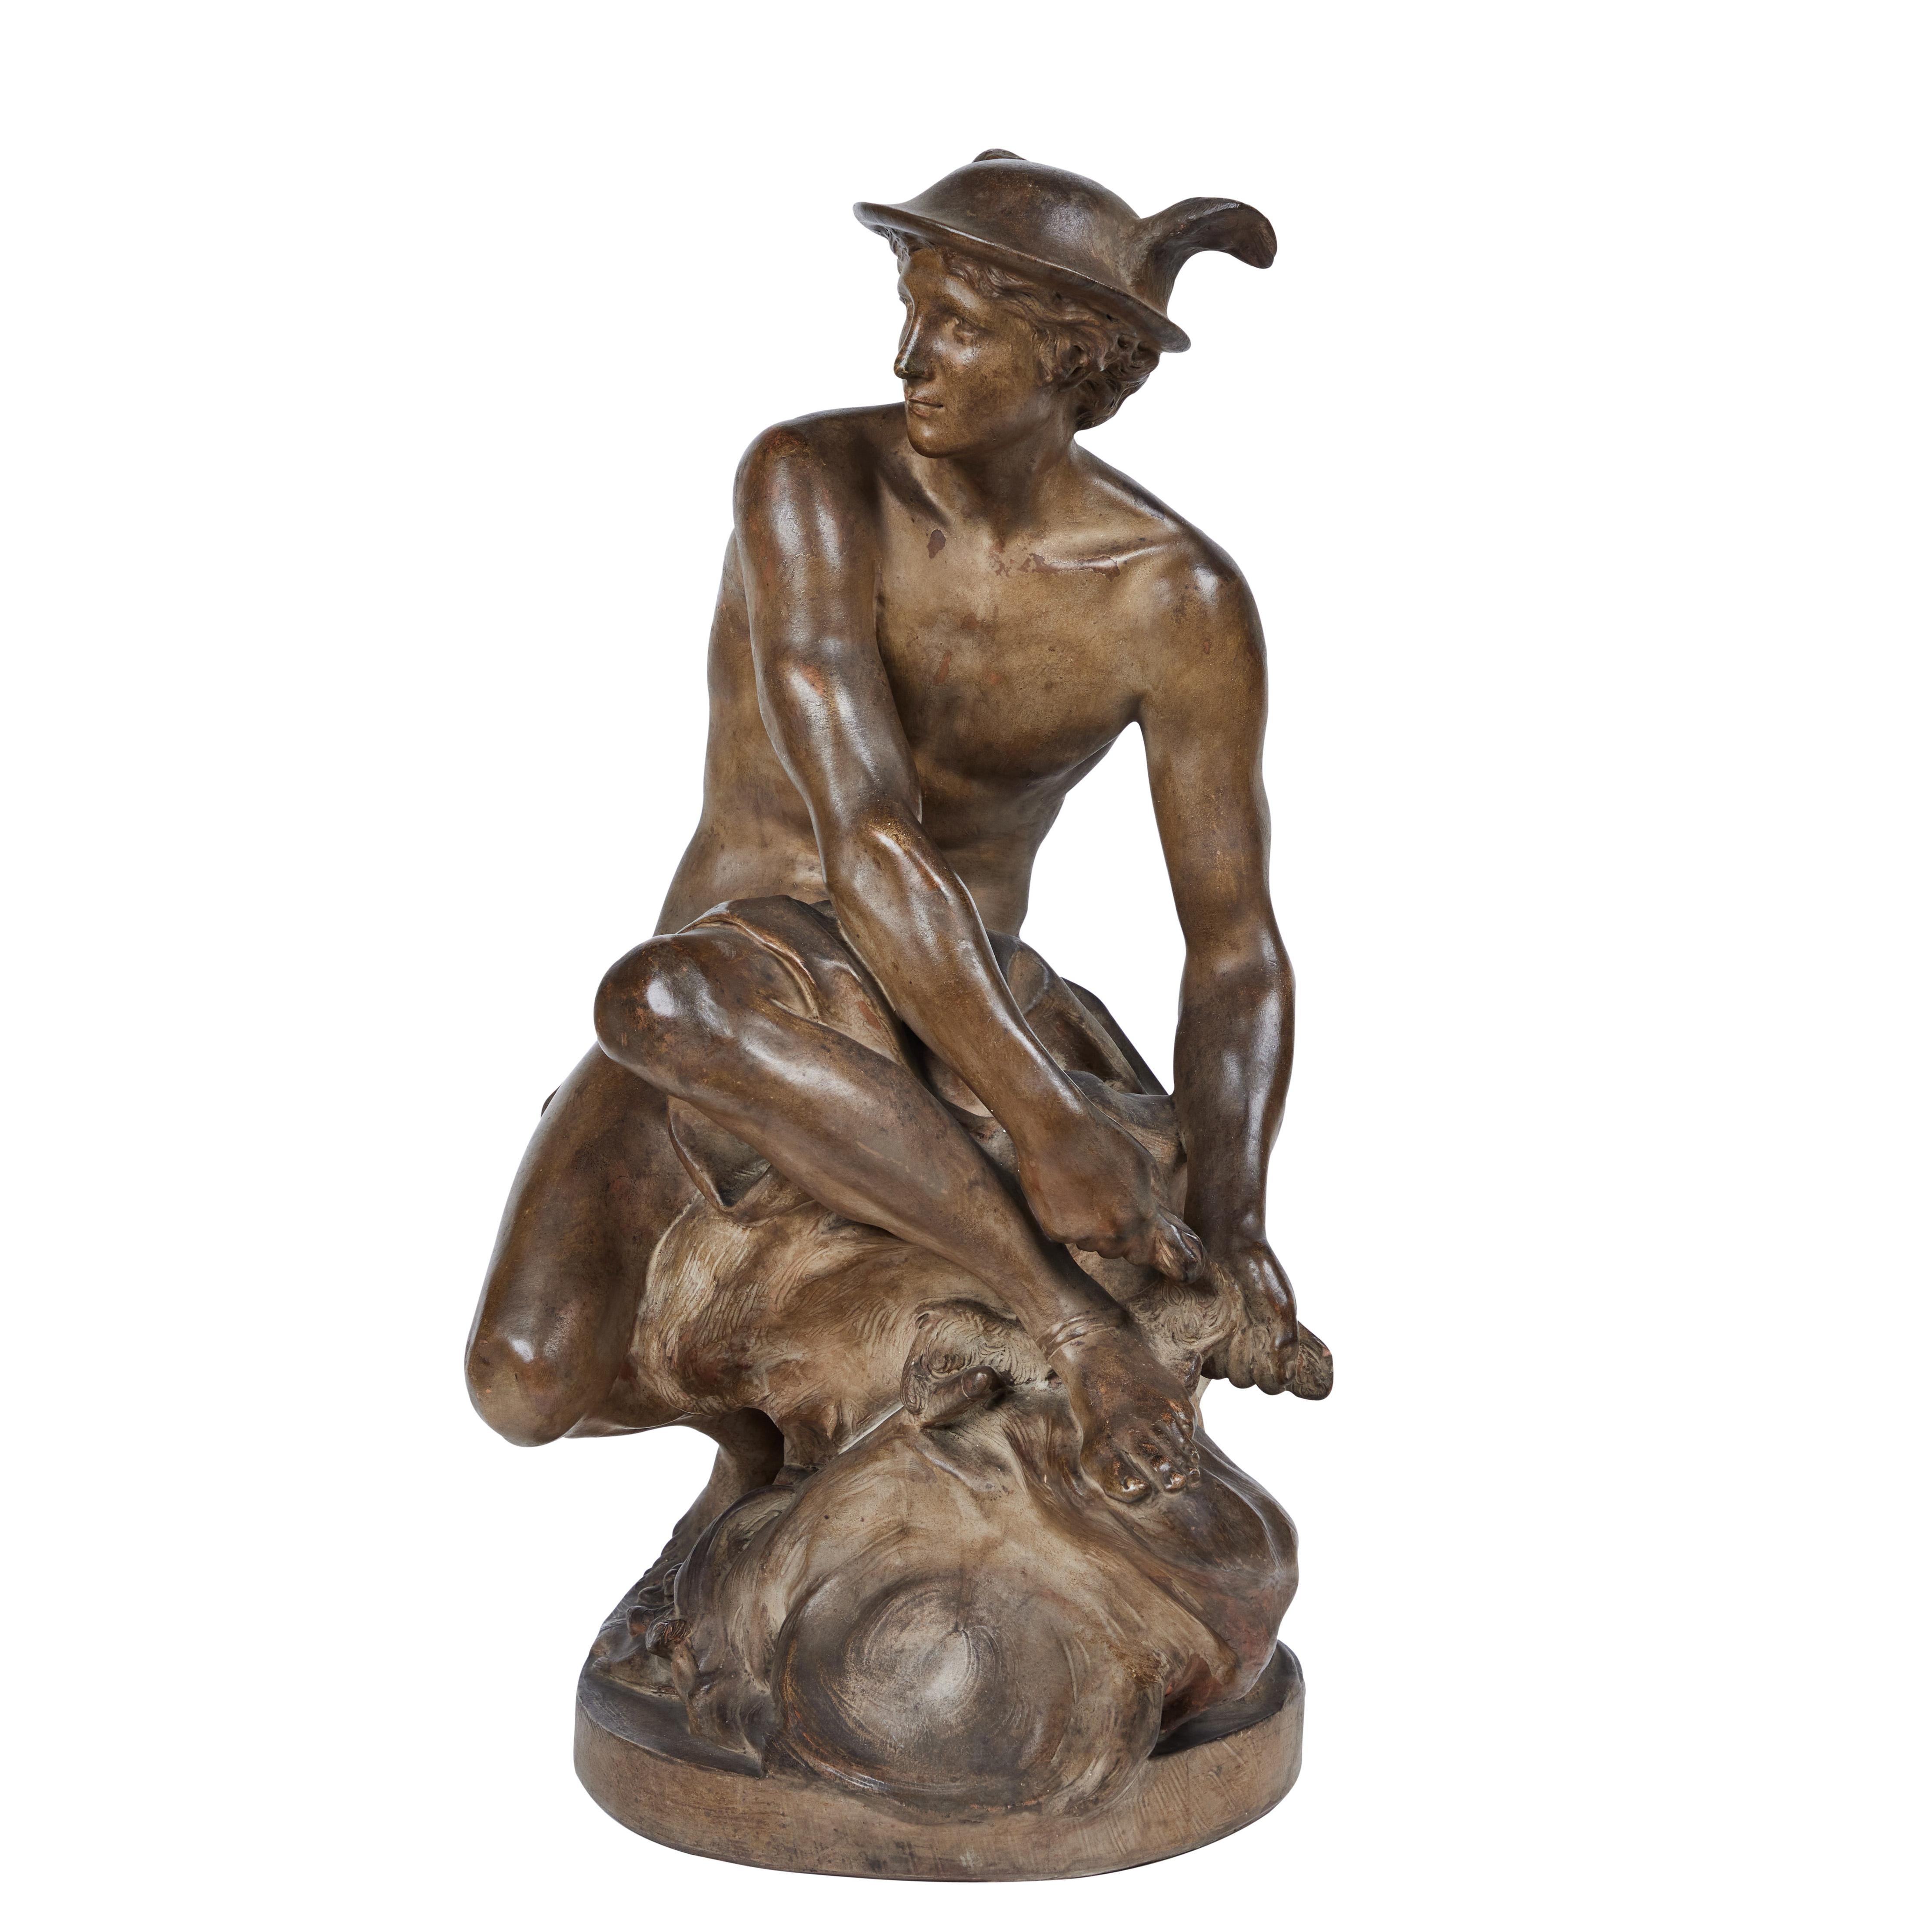 Jean-Baptiste Pigalle Figurative Sculpture - unknown